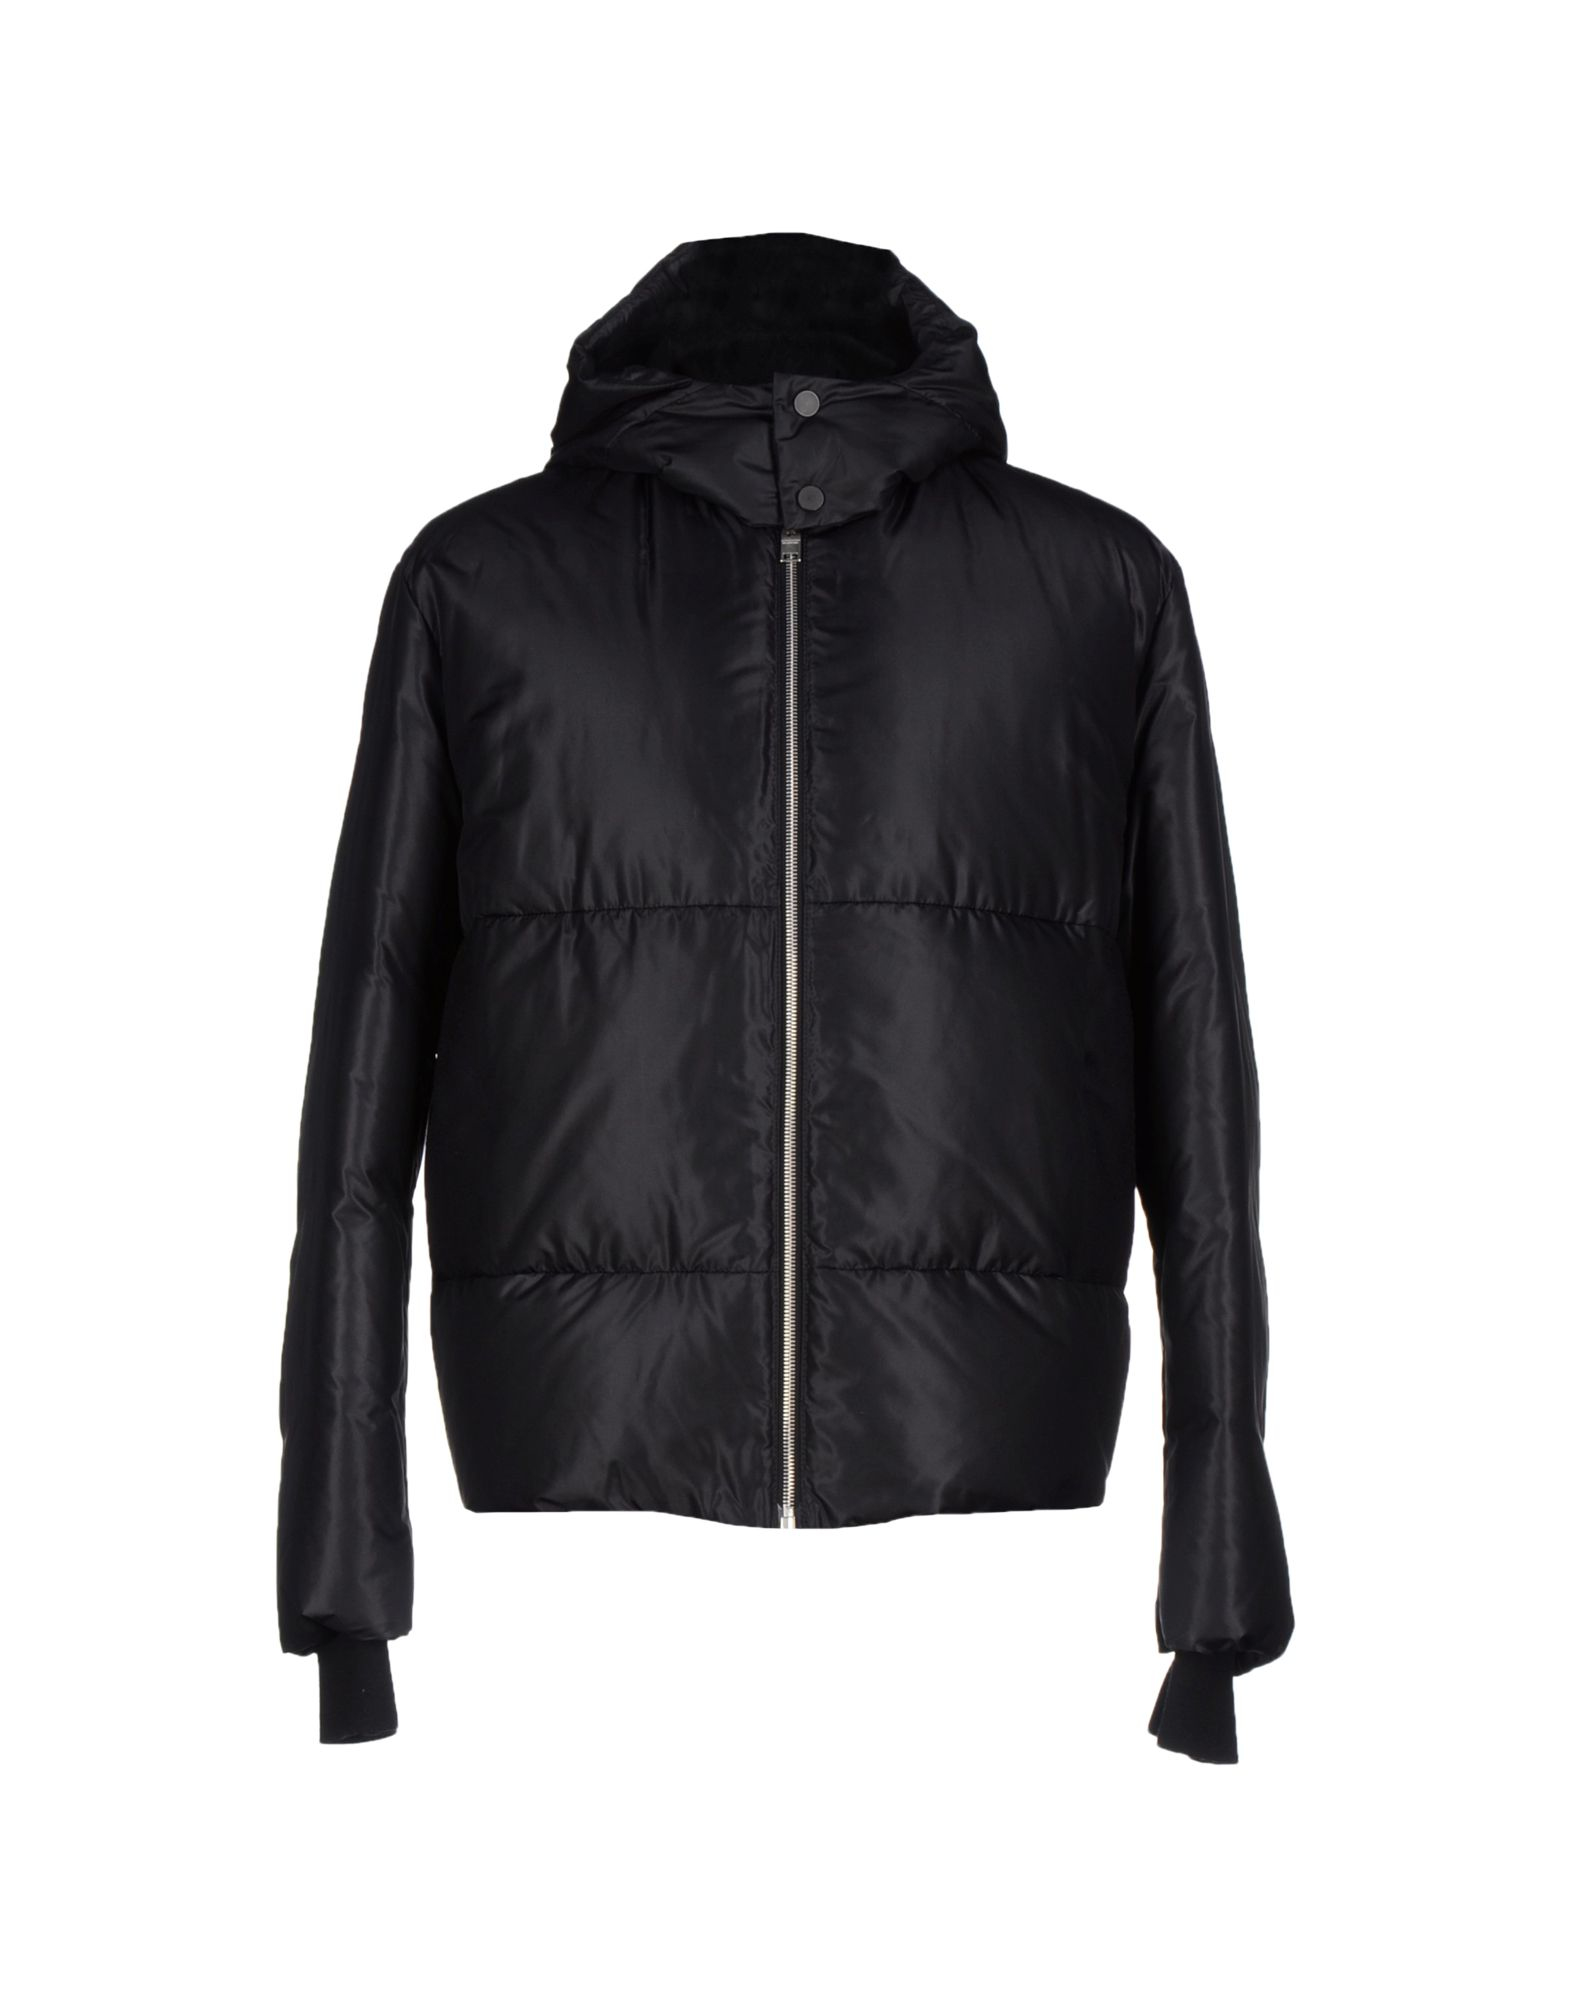 Lyst - Balenciaga Jacket in Black for Men